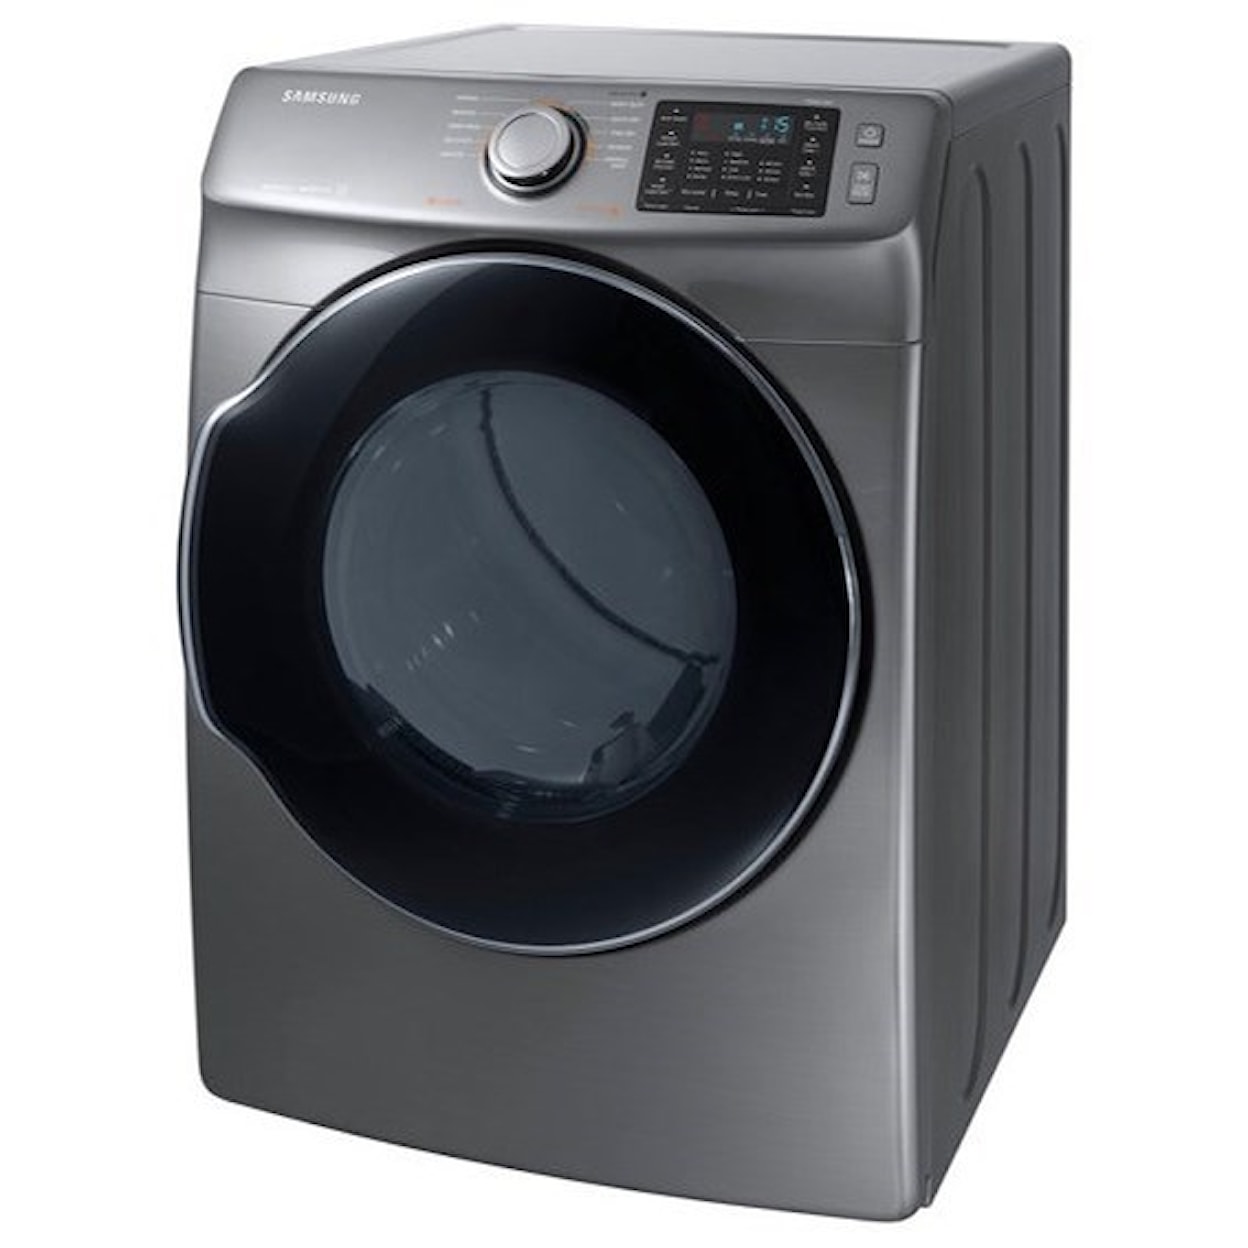 Samsung Appliances Electric Dryers 7.4 cu. ft. Electric Dryer